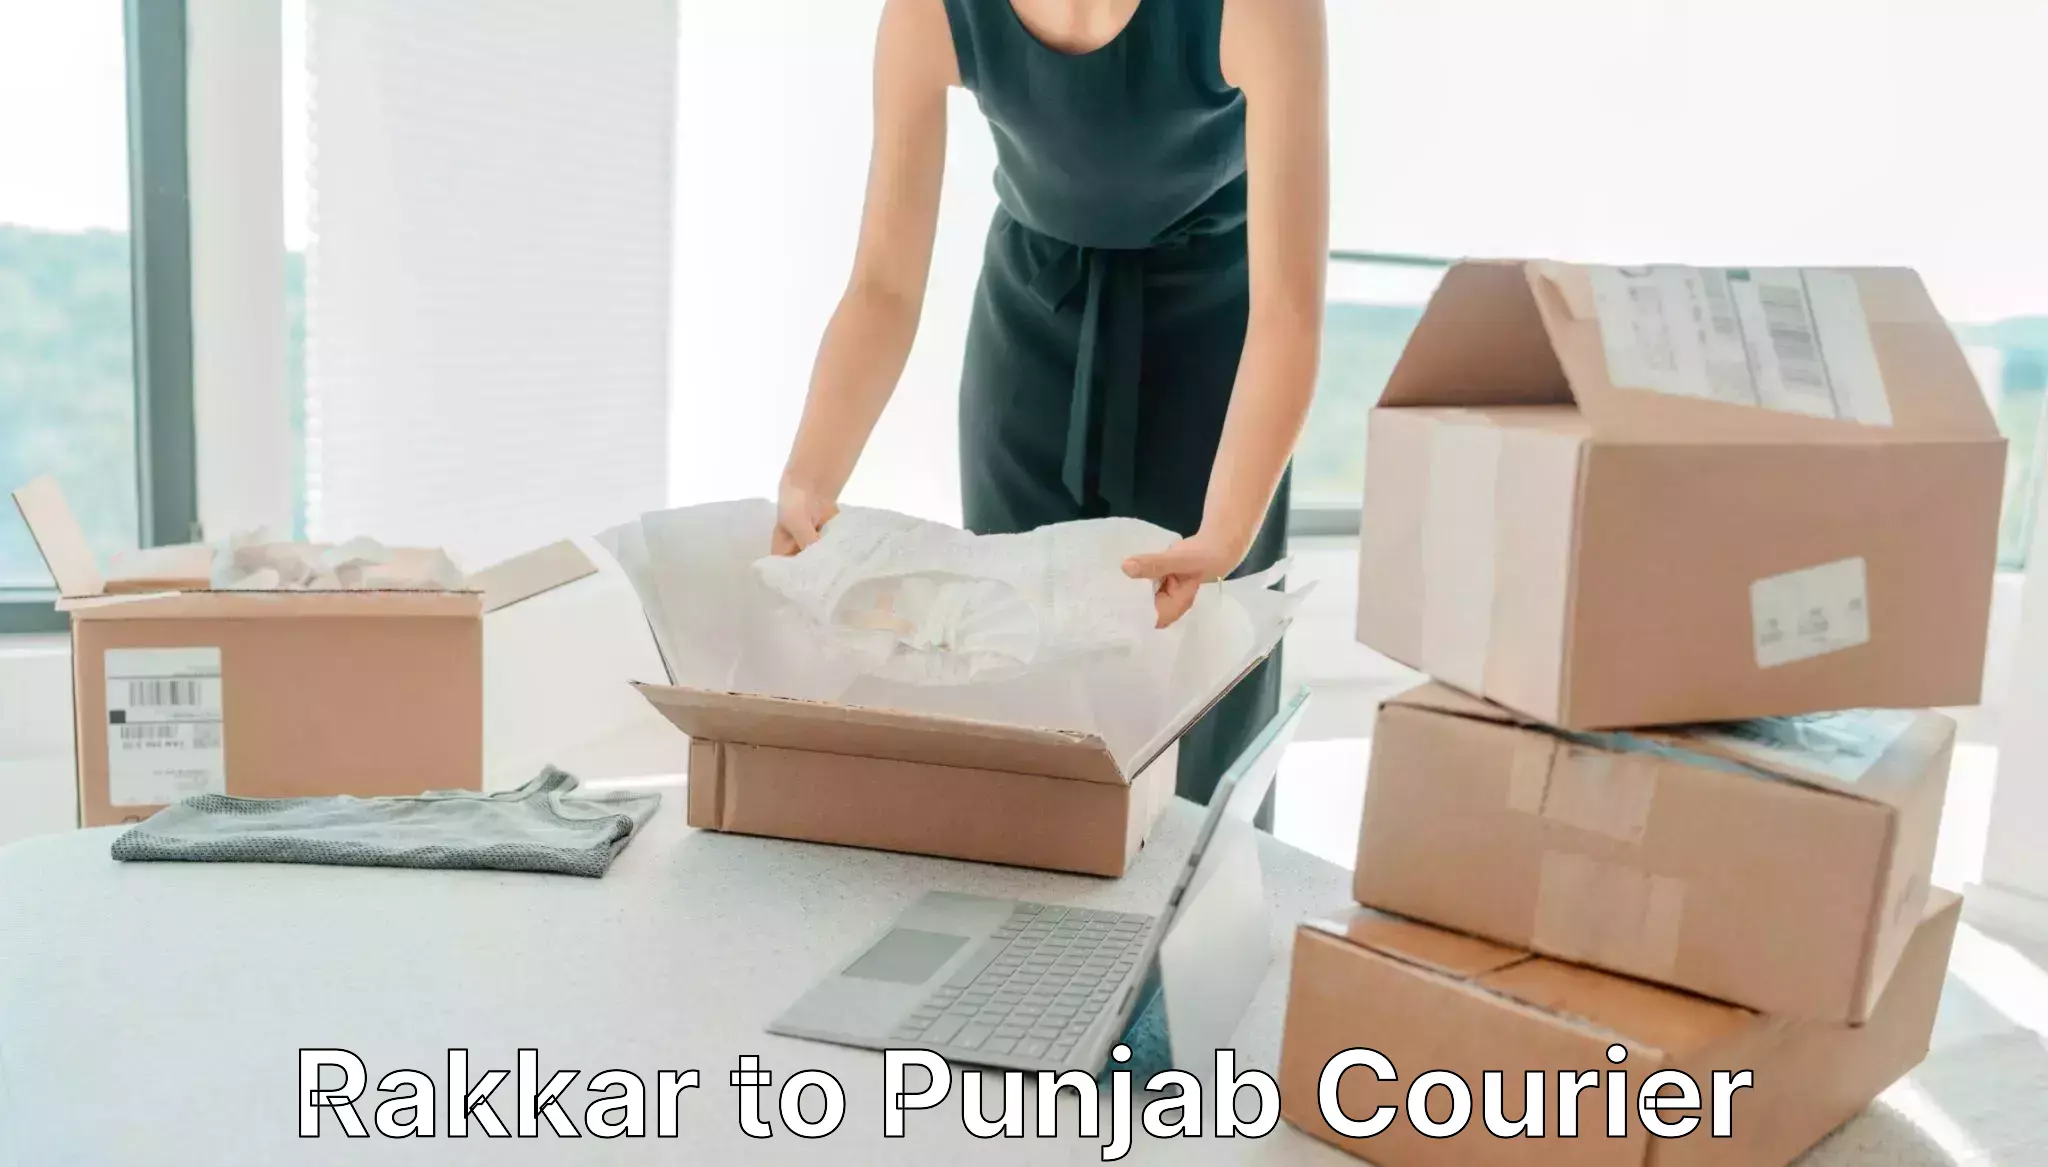 Corporate courier solutions Rakkar to Punjab